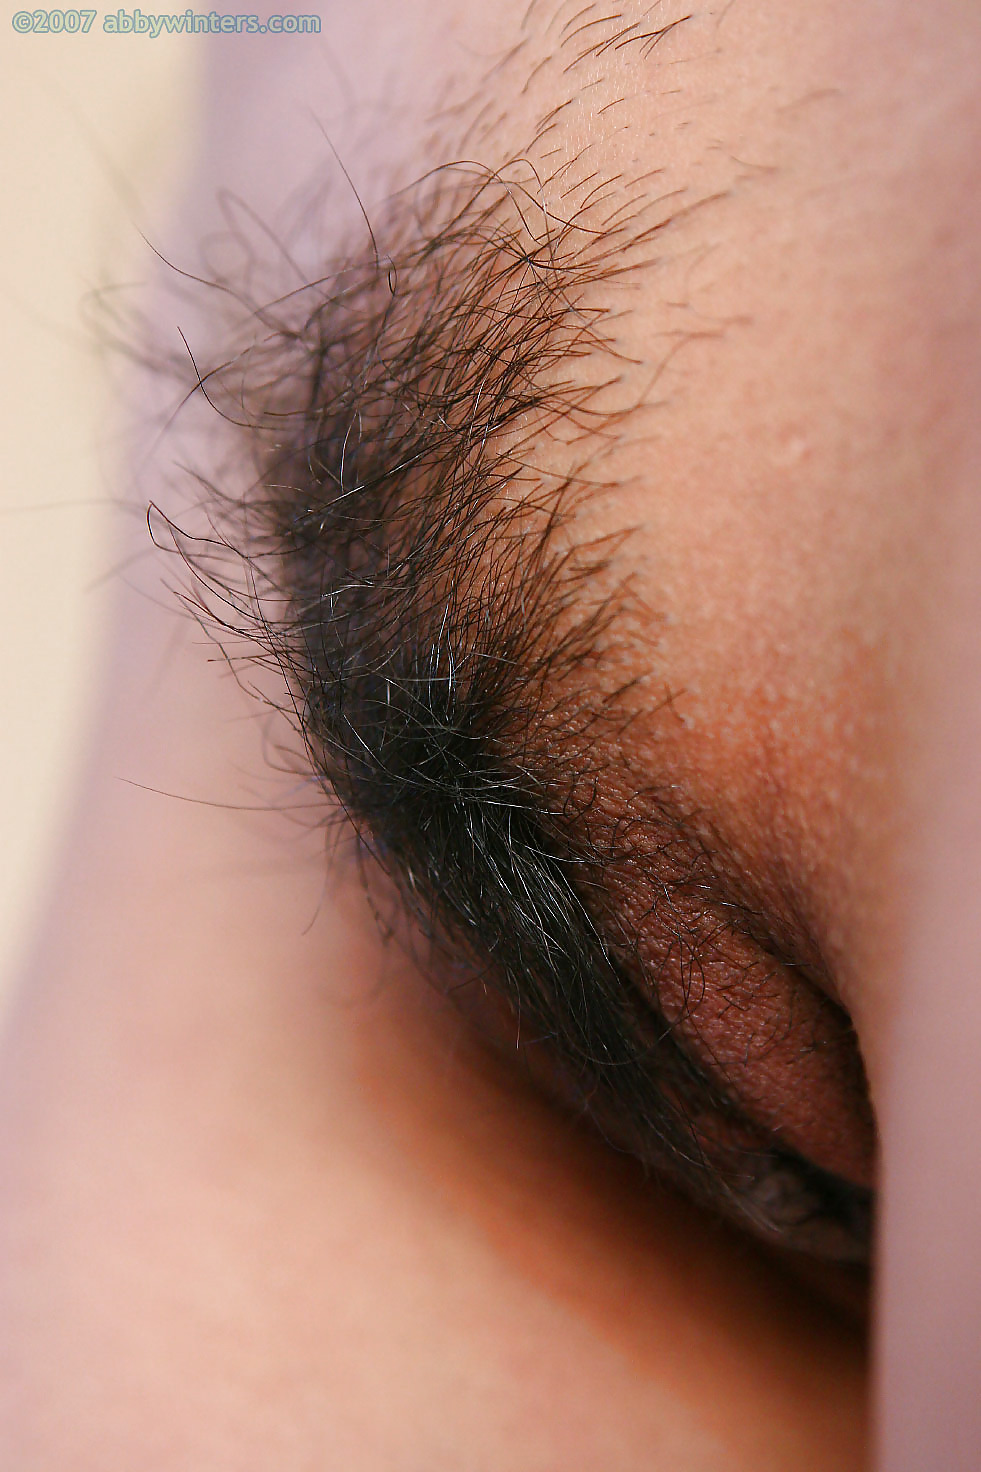 Nice hairy close-up  #2457529